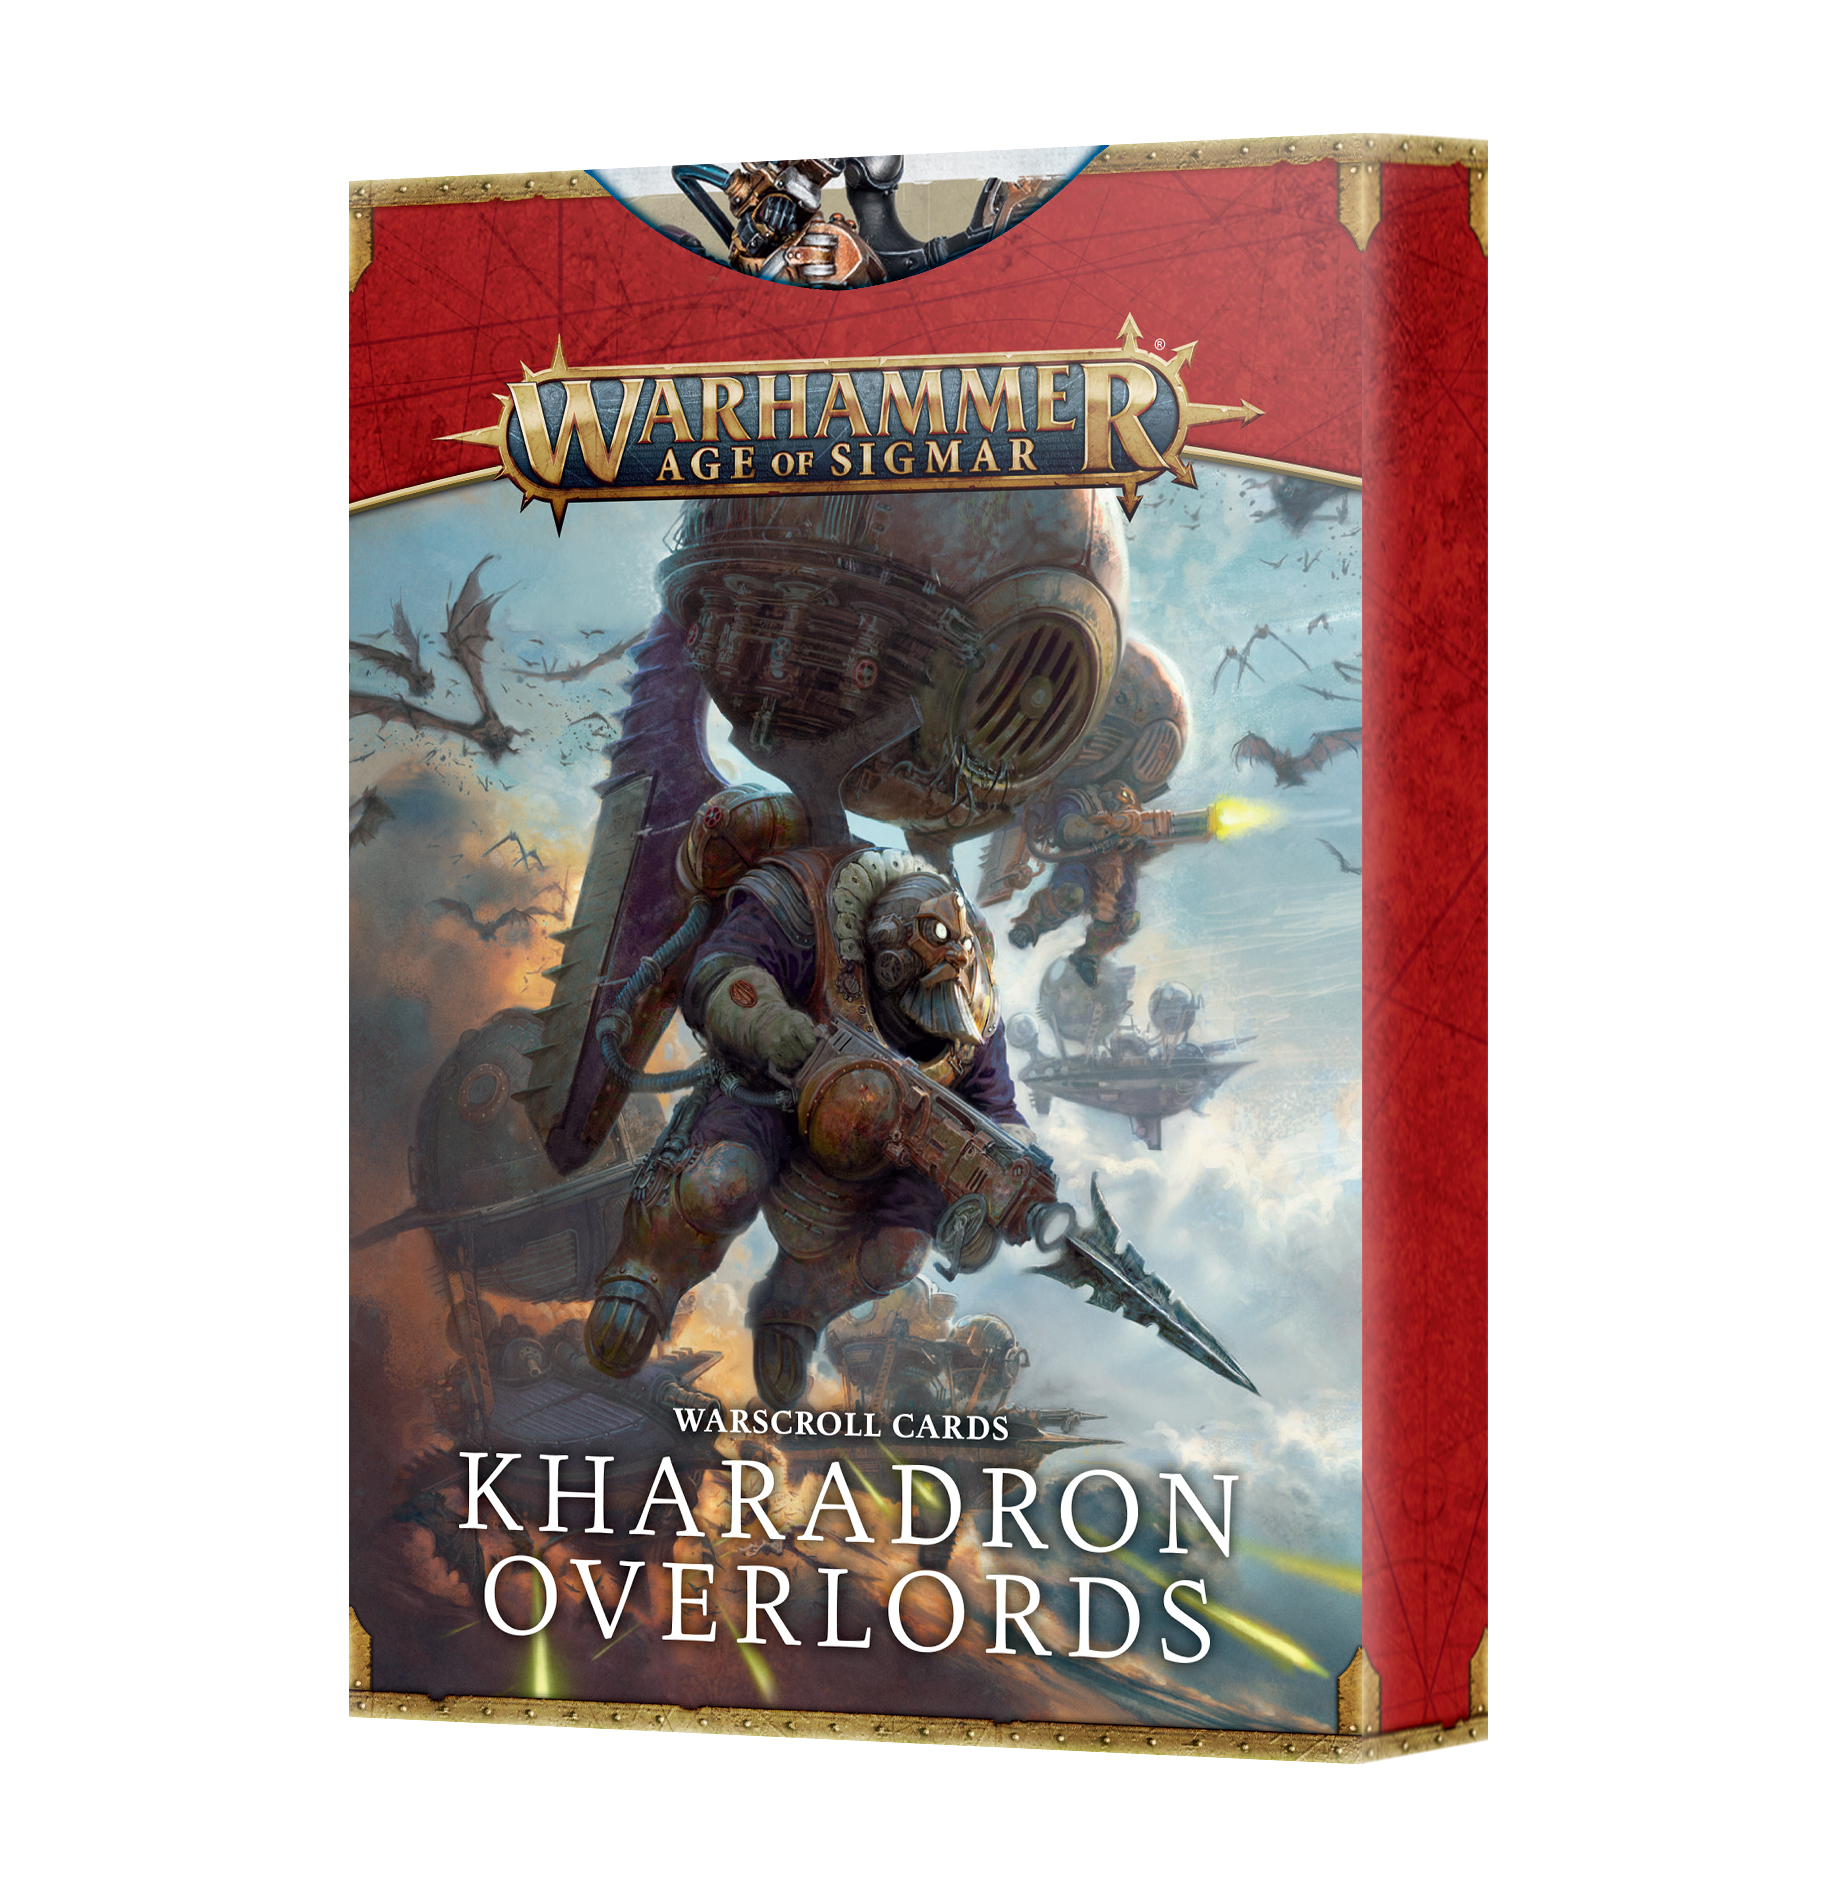 Warscroll Cards - 84-03 - Kharadron Overlords - Warhammer Age of Sigmar - En Français